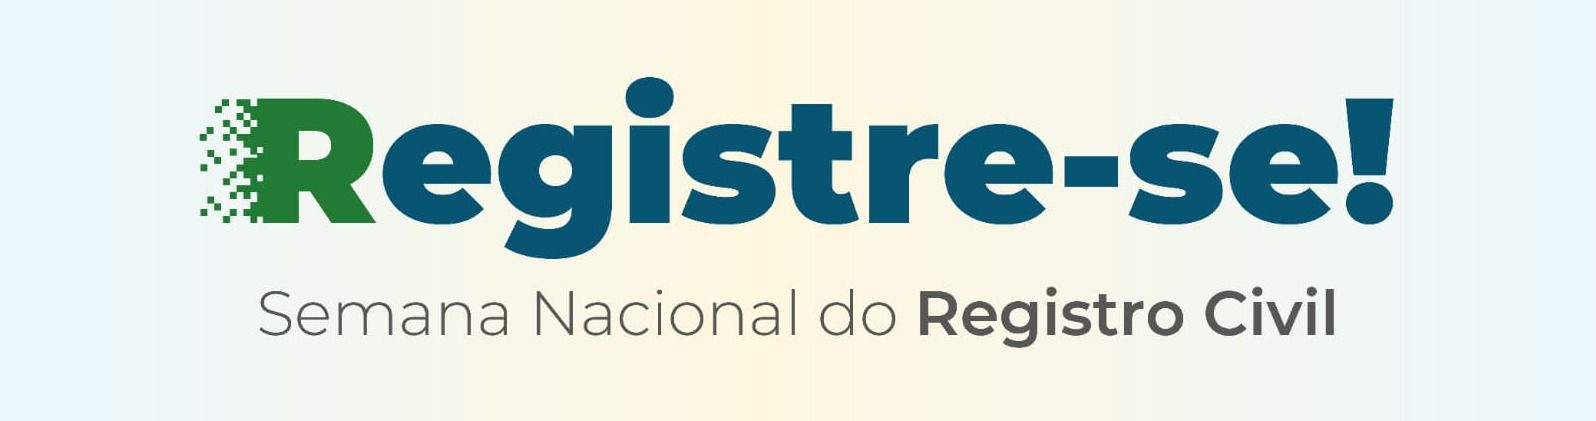 Logomarca da Semana Nacional do Registro Civil - Registre-se!